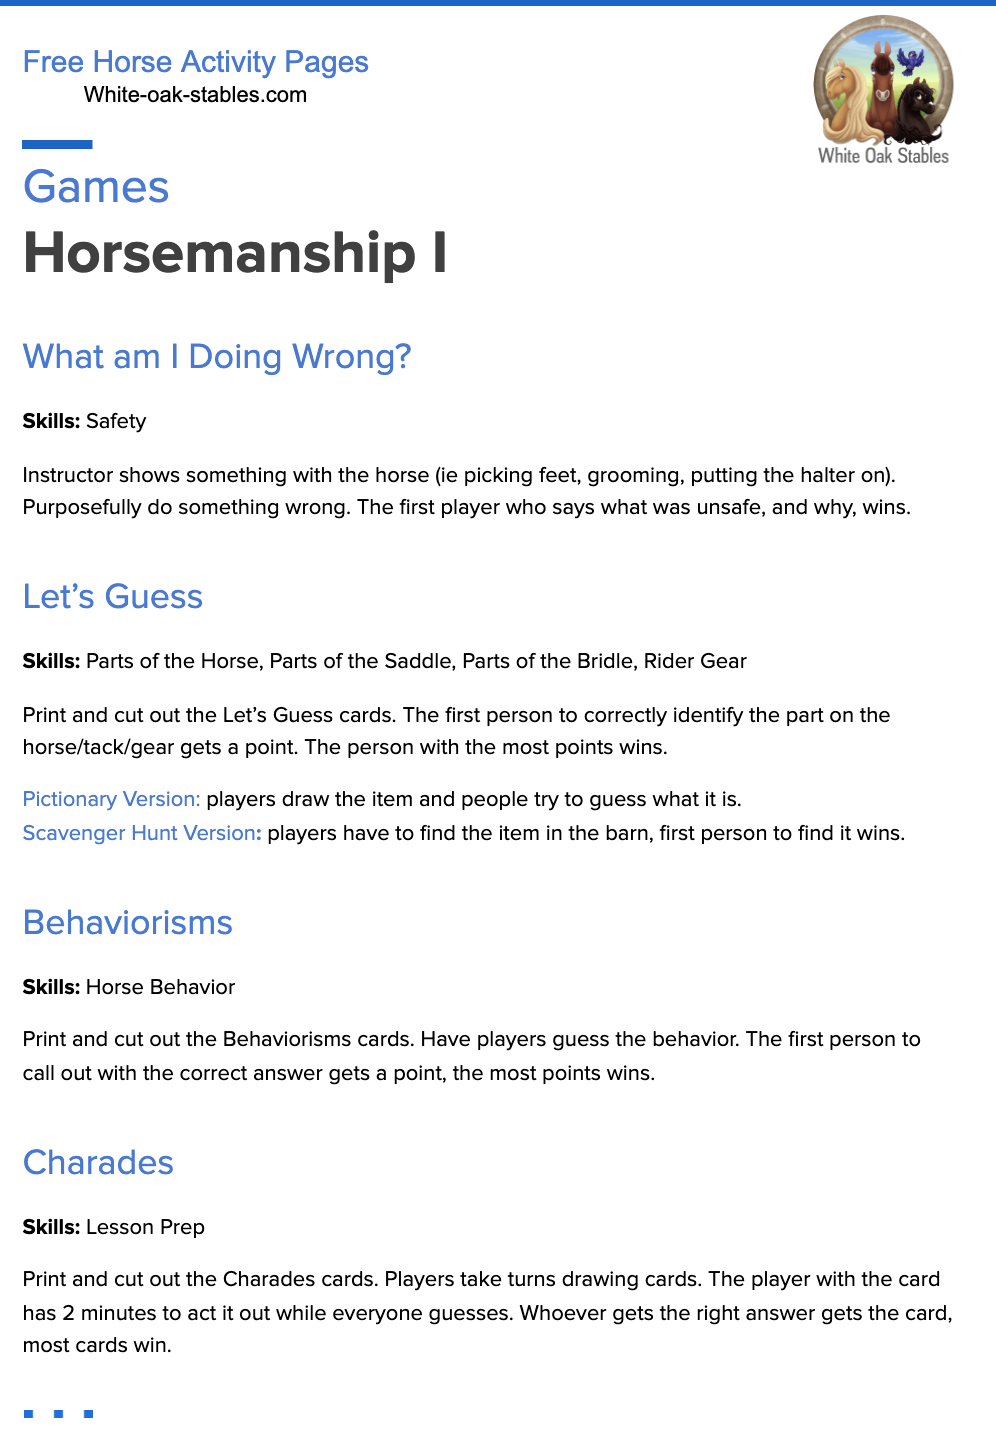 Games – Horsemanship I